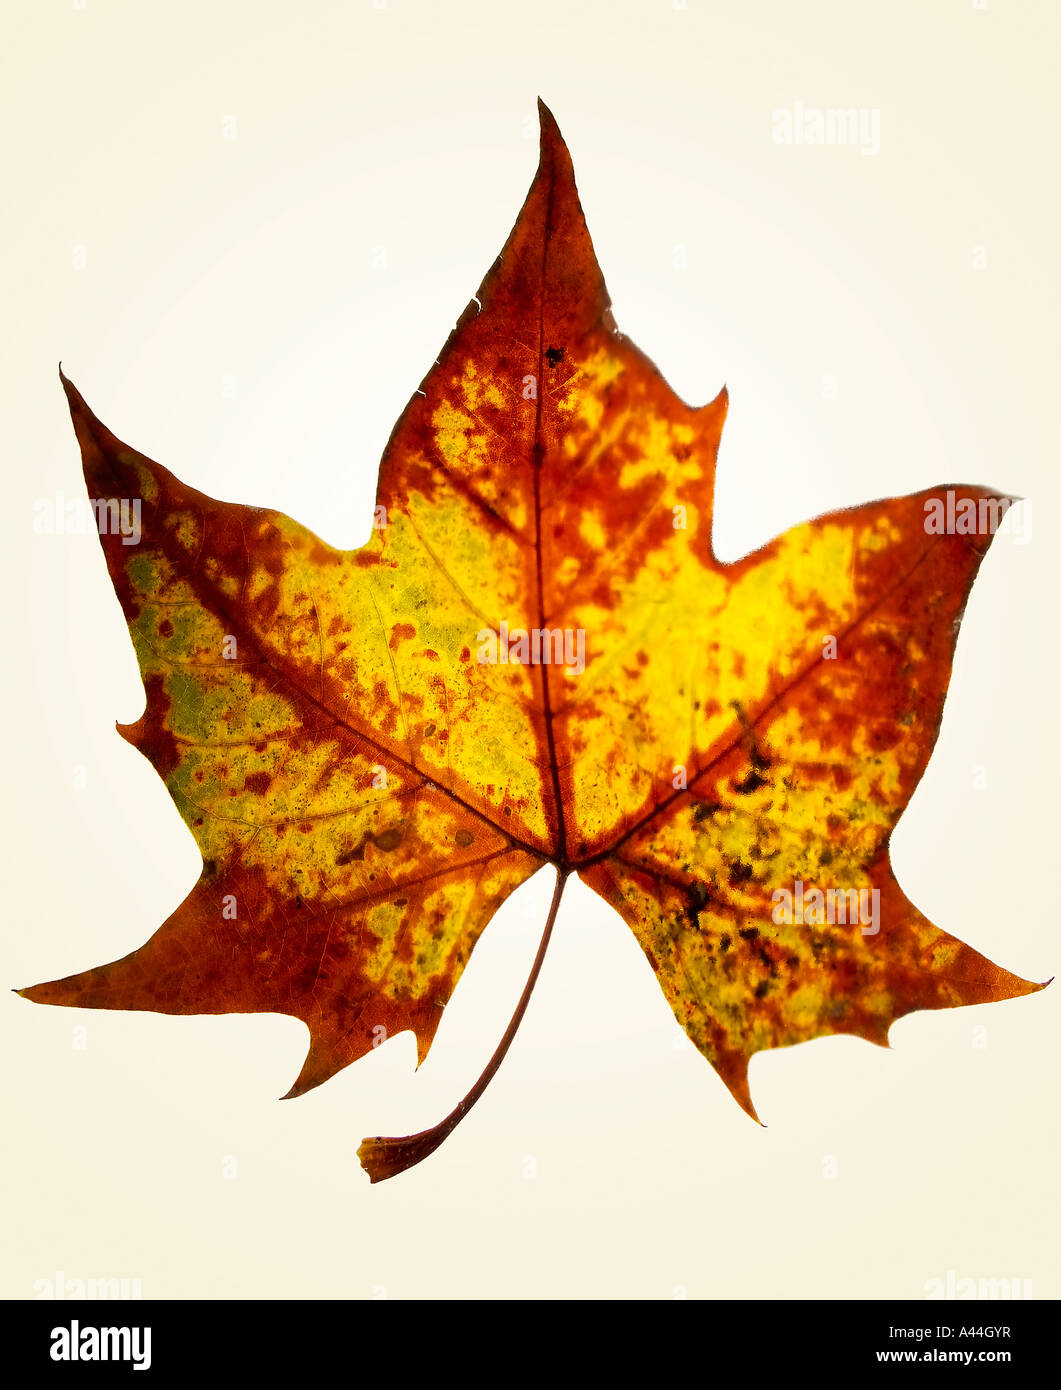 Maple tree leaf in line art style. Thanksgiving day, autumn season